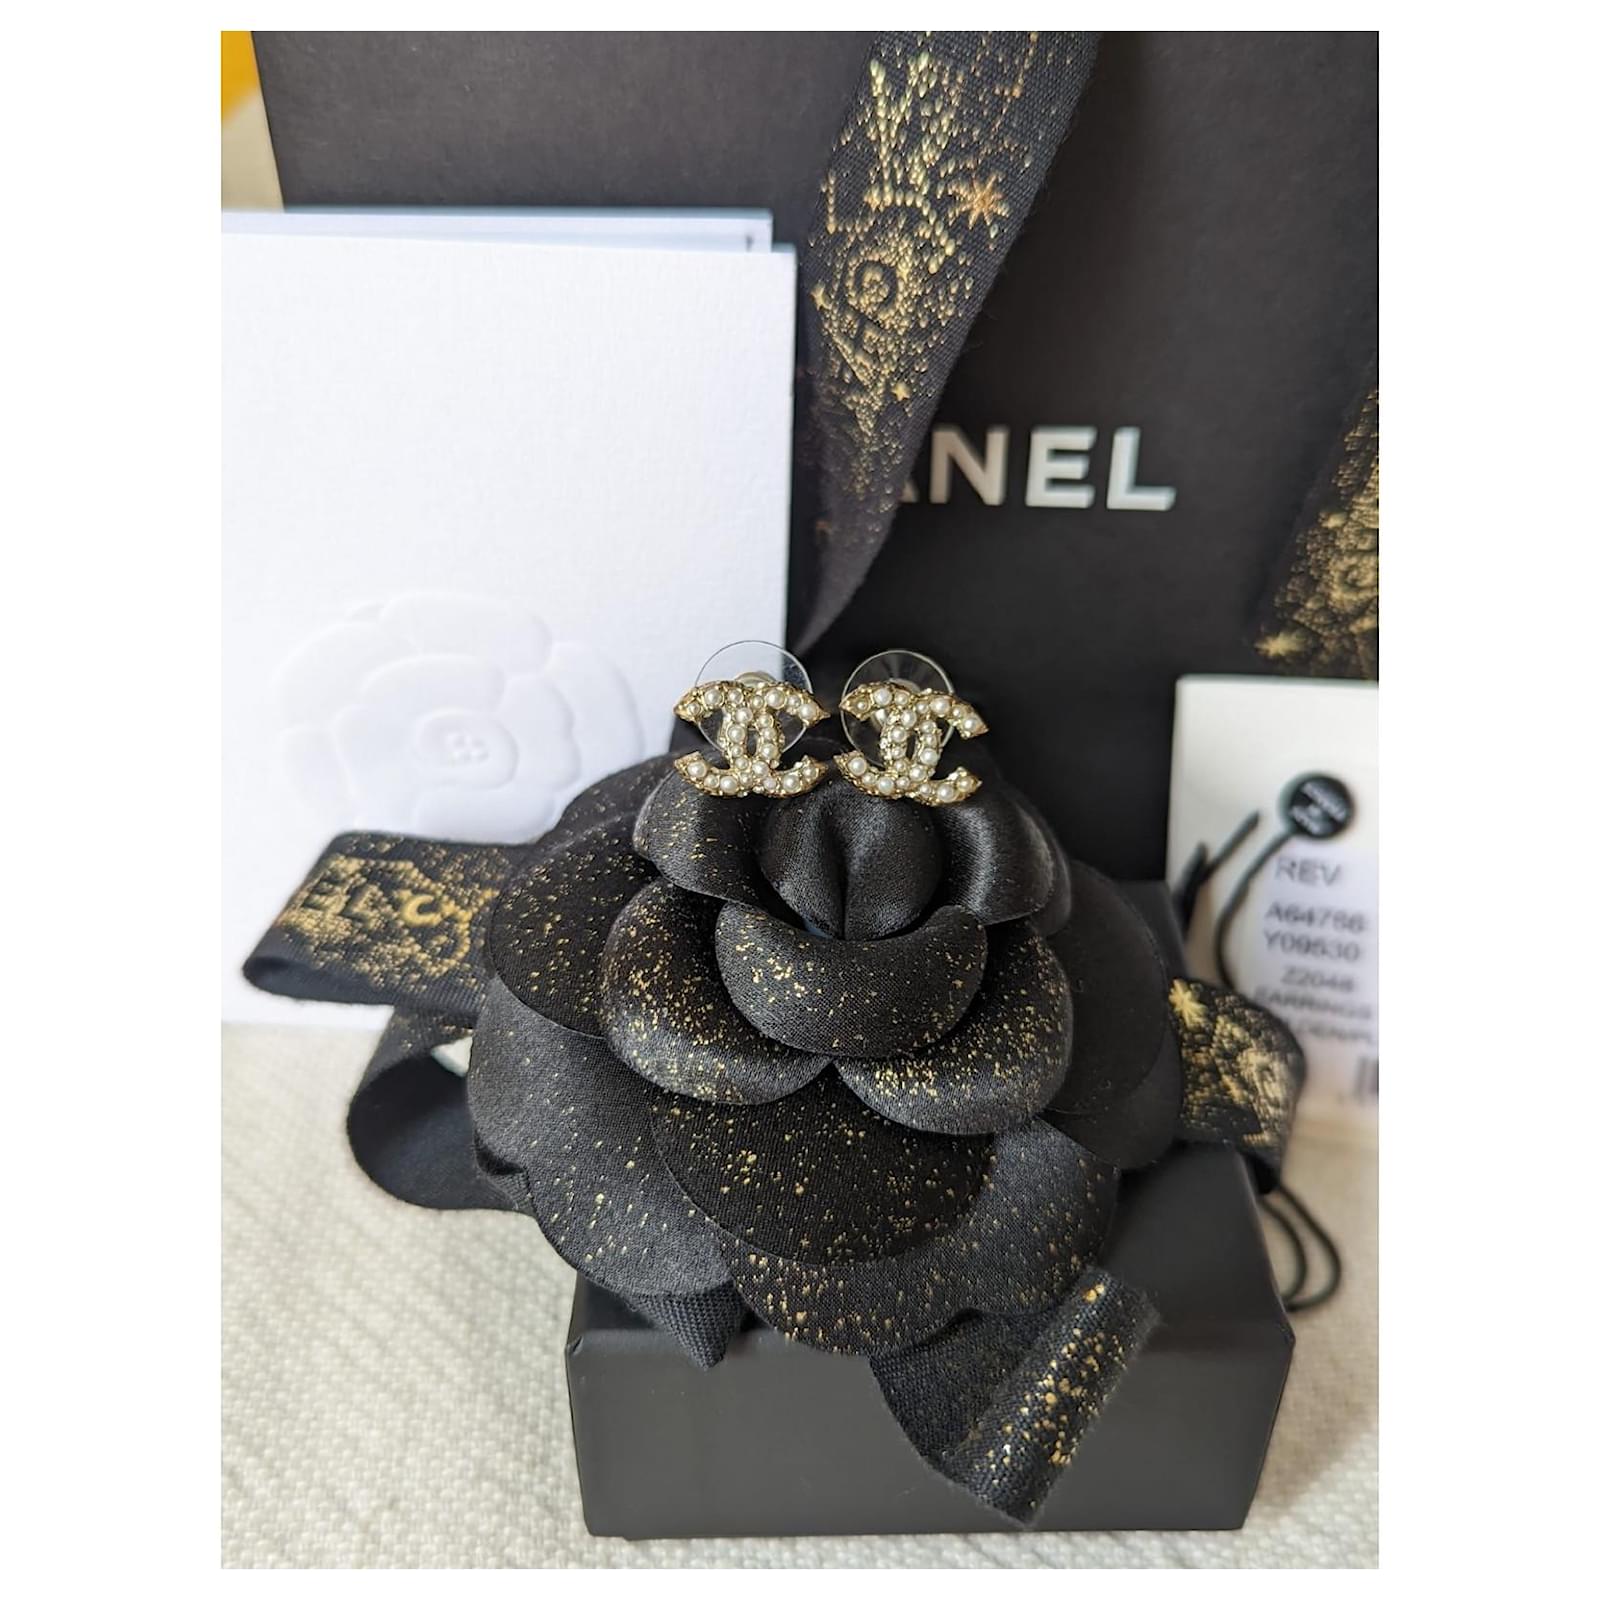 Authentic Chanel Earrings CC Pearl Gold Pendant 31 Rue De 